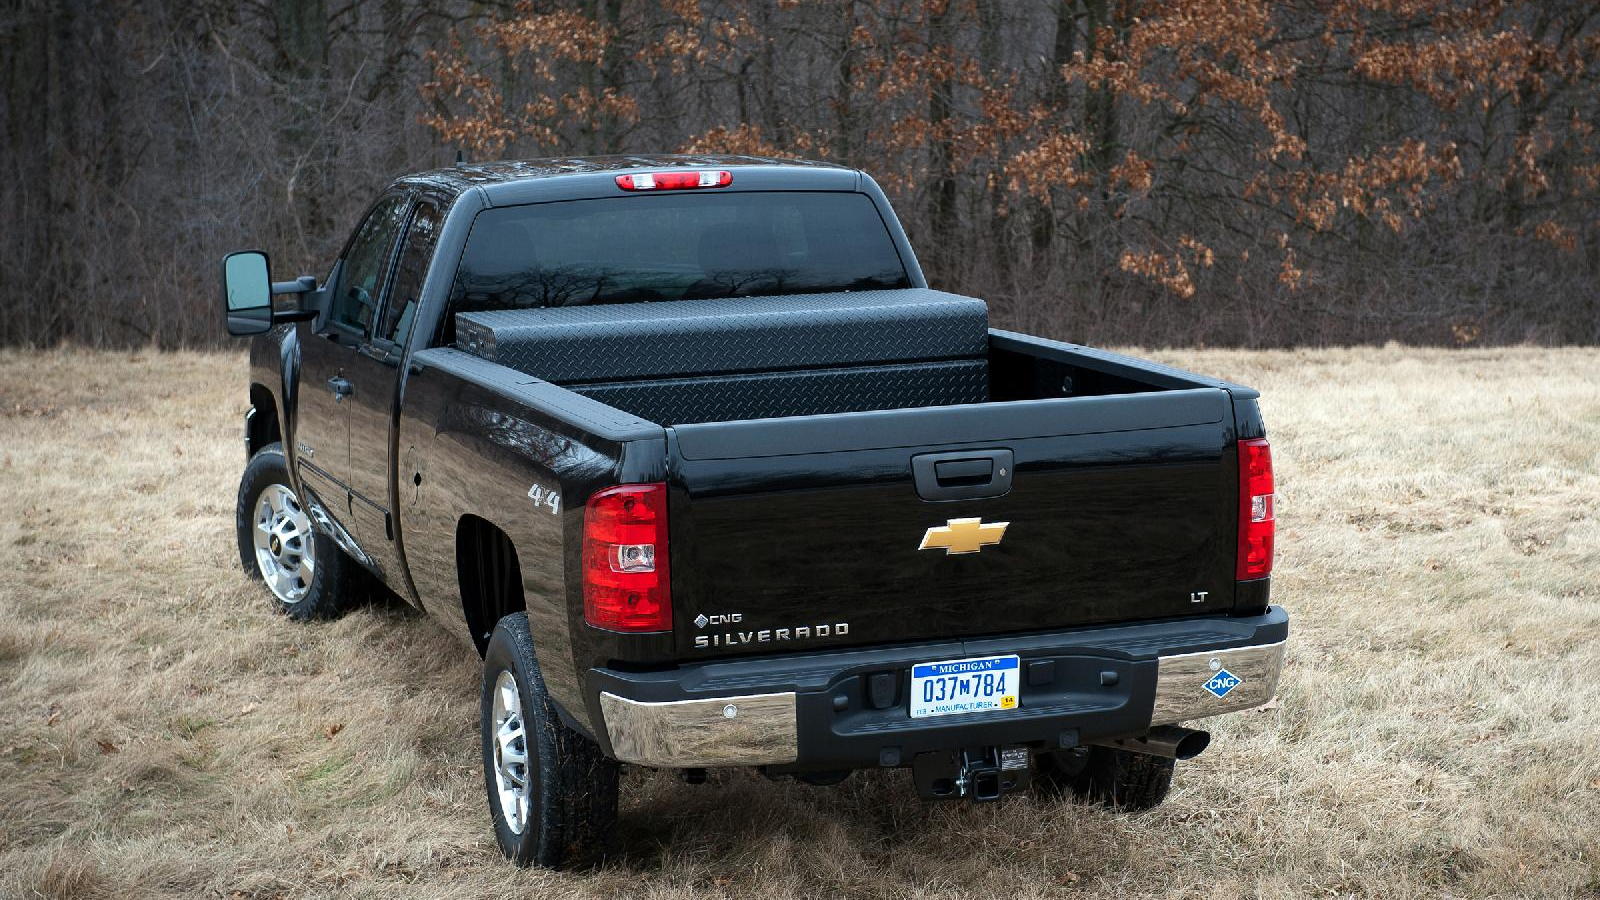 2013 Chevrolet Silverado 2500 HD bi-fuel (natural gas & gasoline) pickup truck